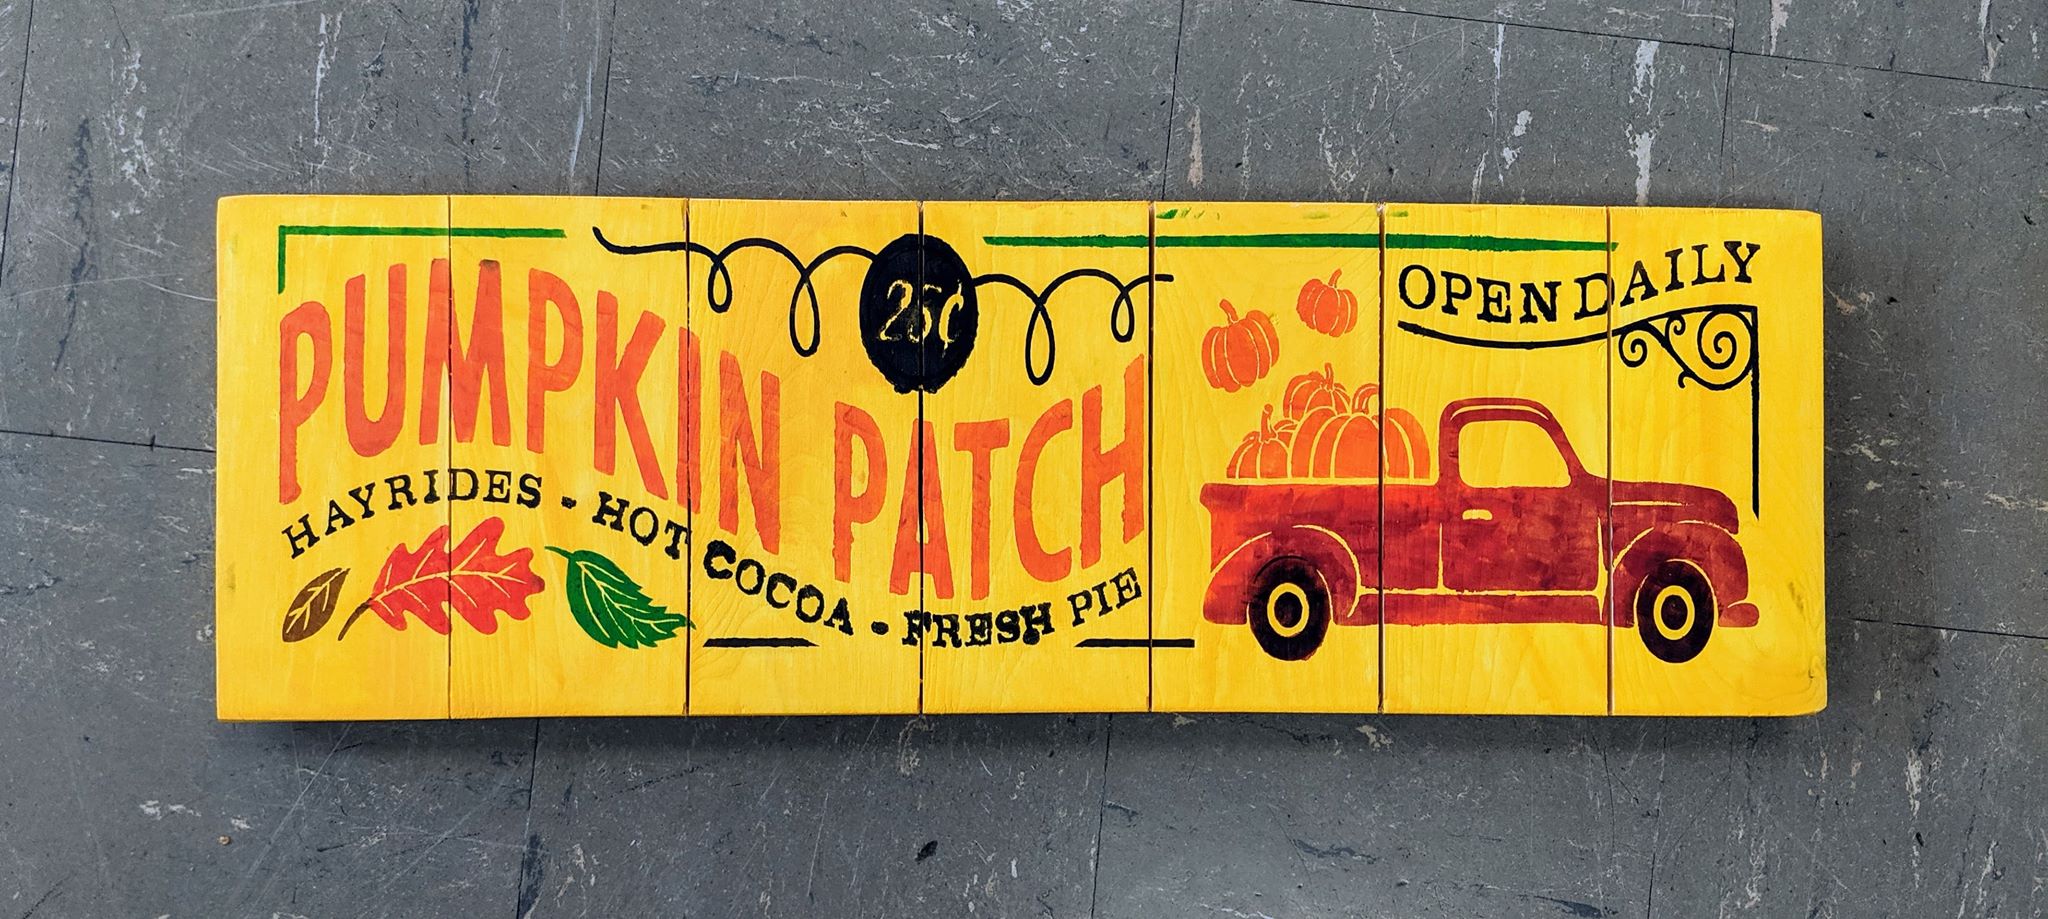 Pumpkin Patch Hayrides Hot Cocoa Fresh pie 8x24